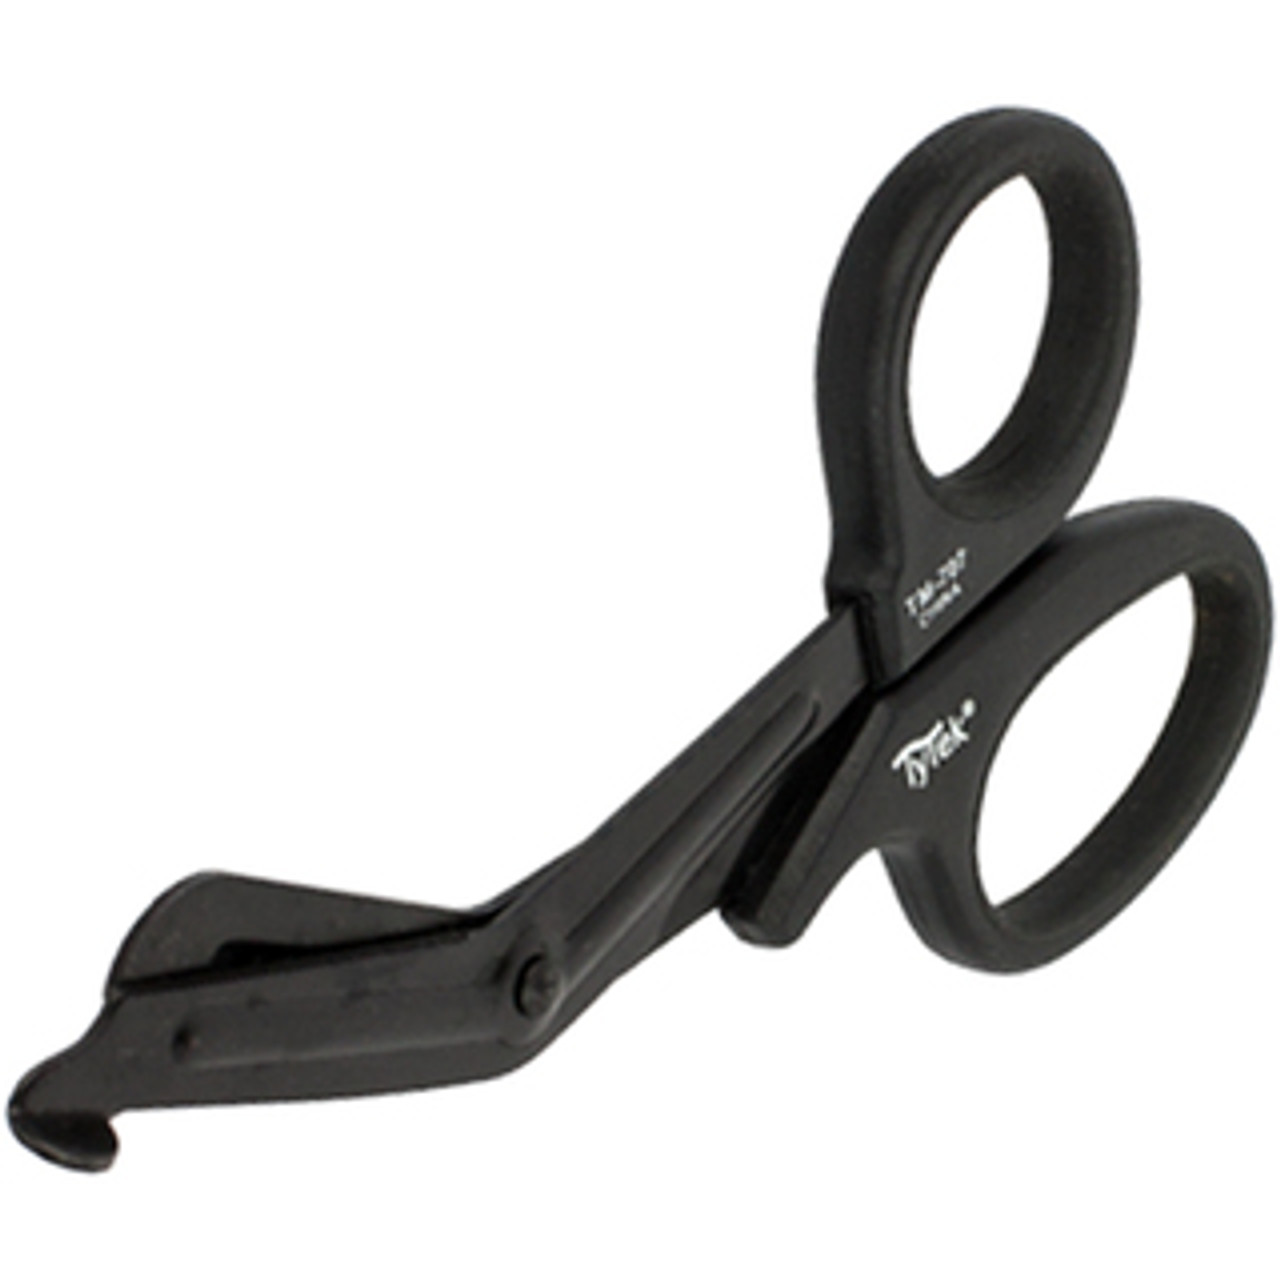 Tactical Black Piranha Trauma Scissors with Comfort-Grip Handle 7.25